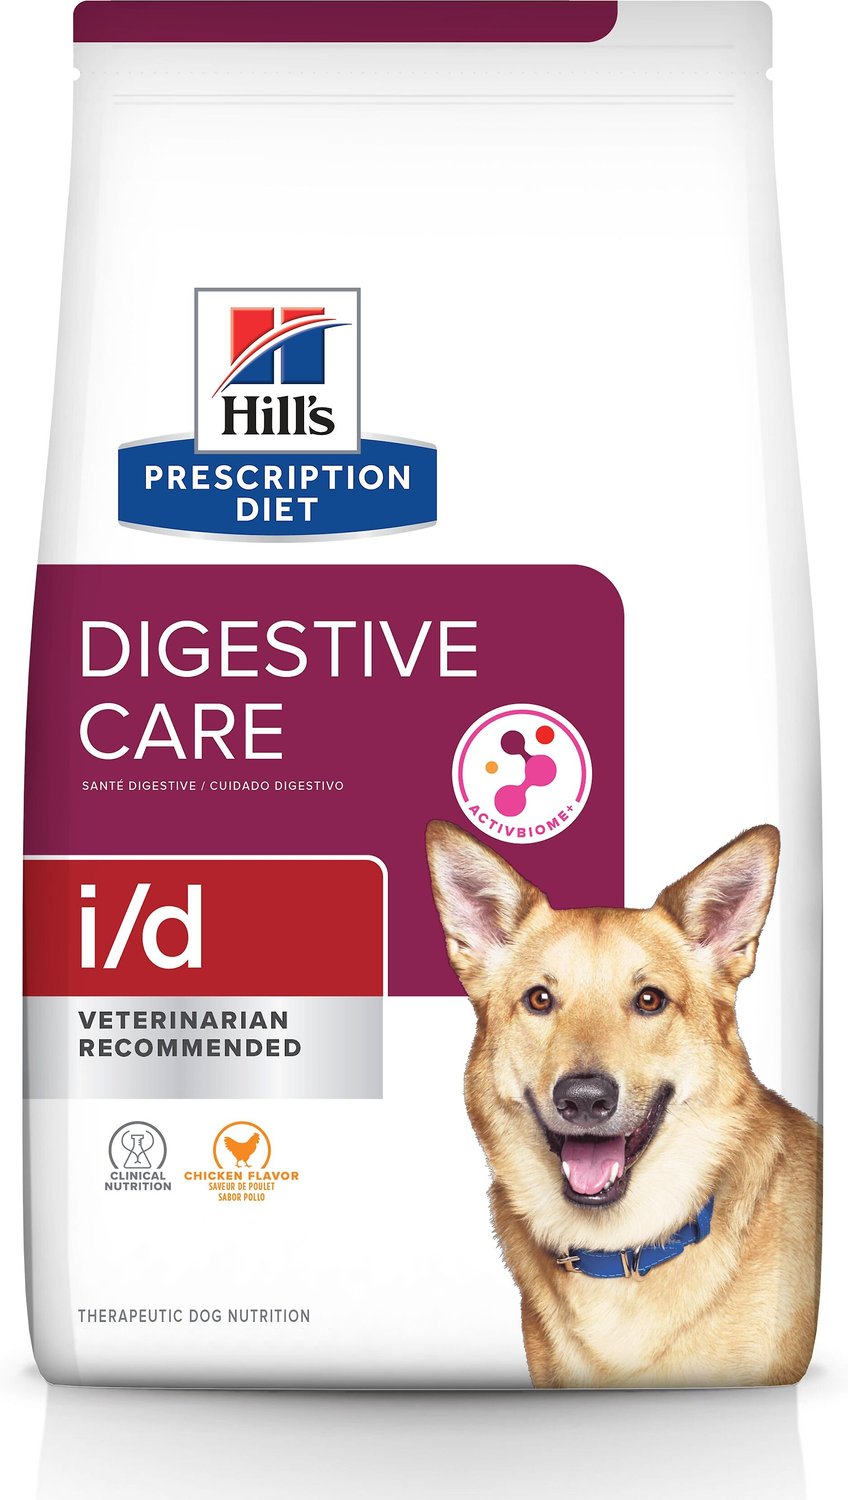 hills digestive care dog food